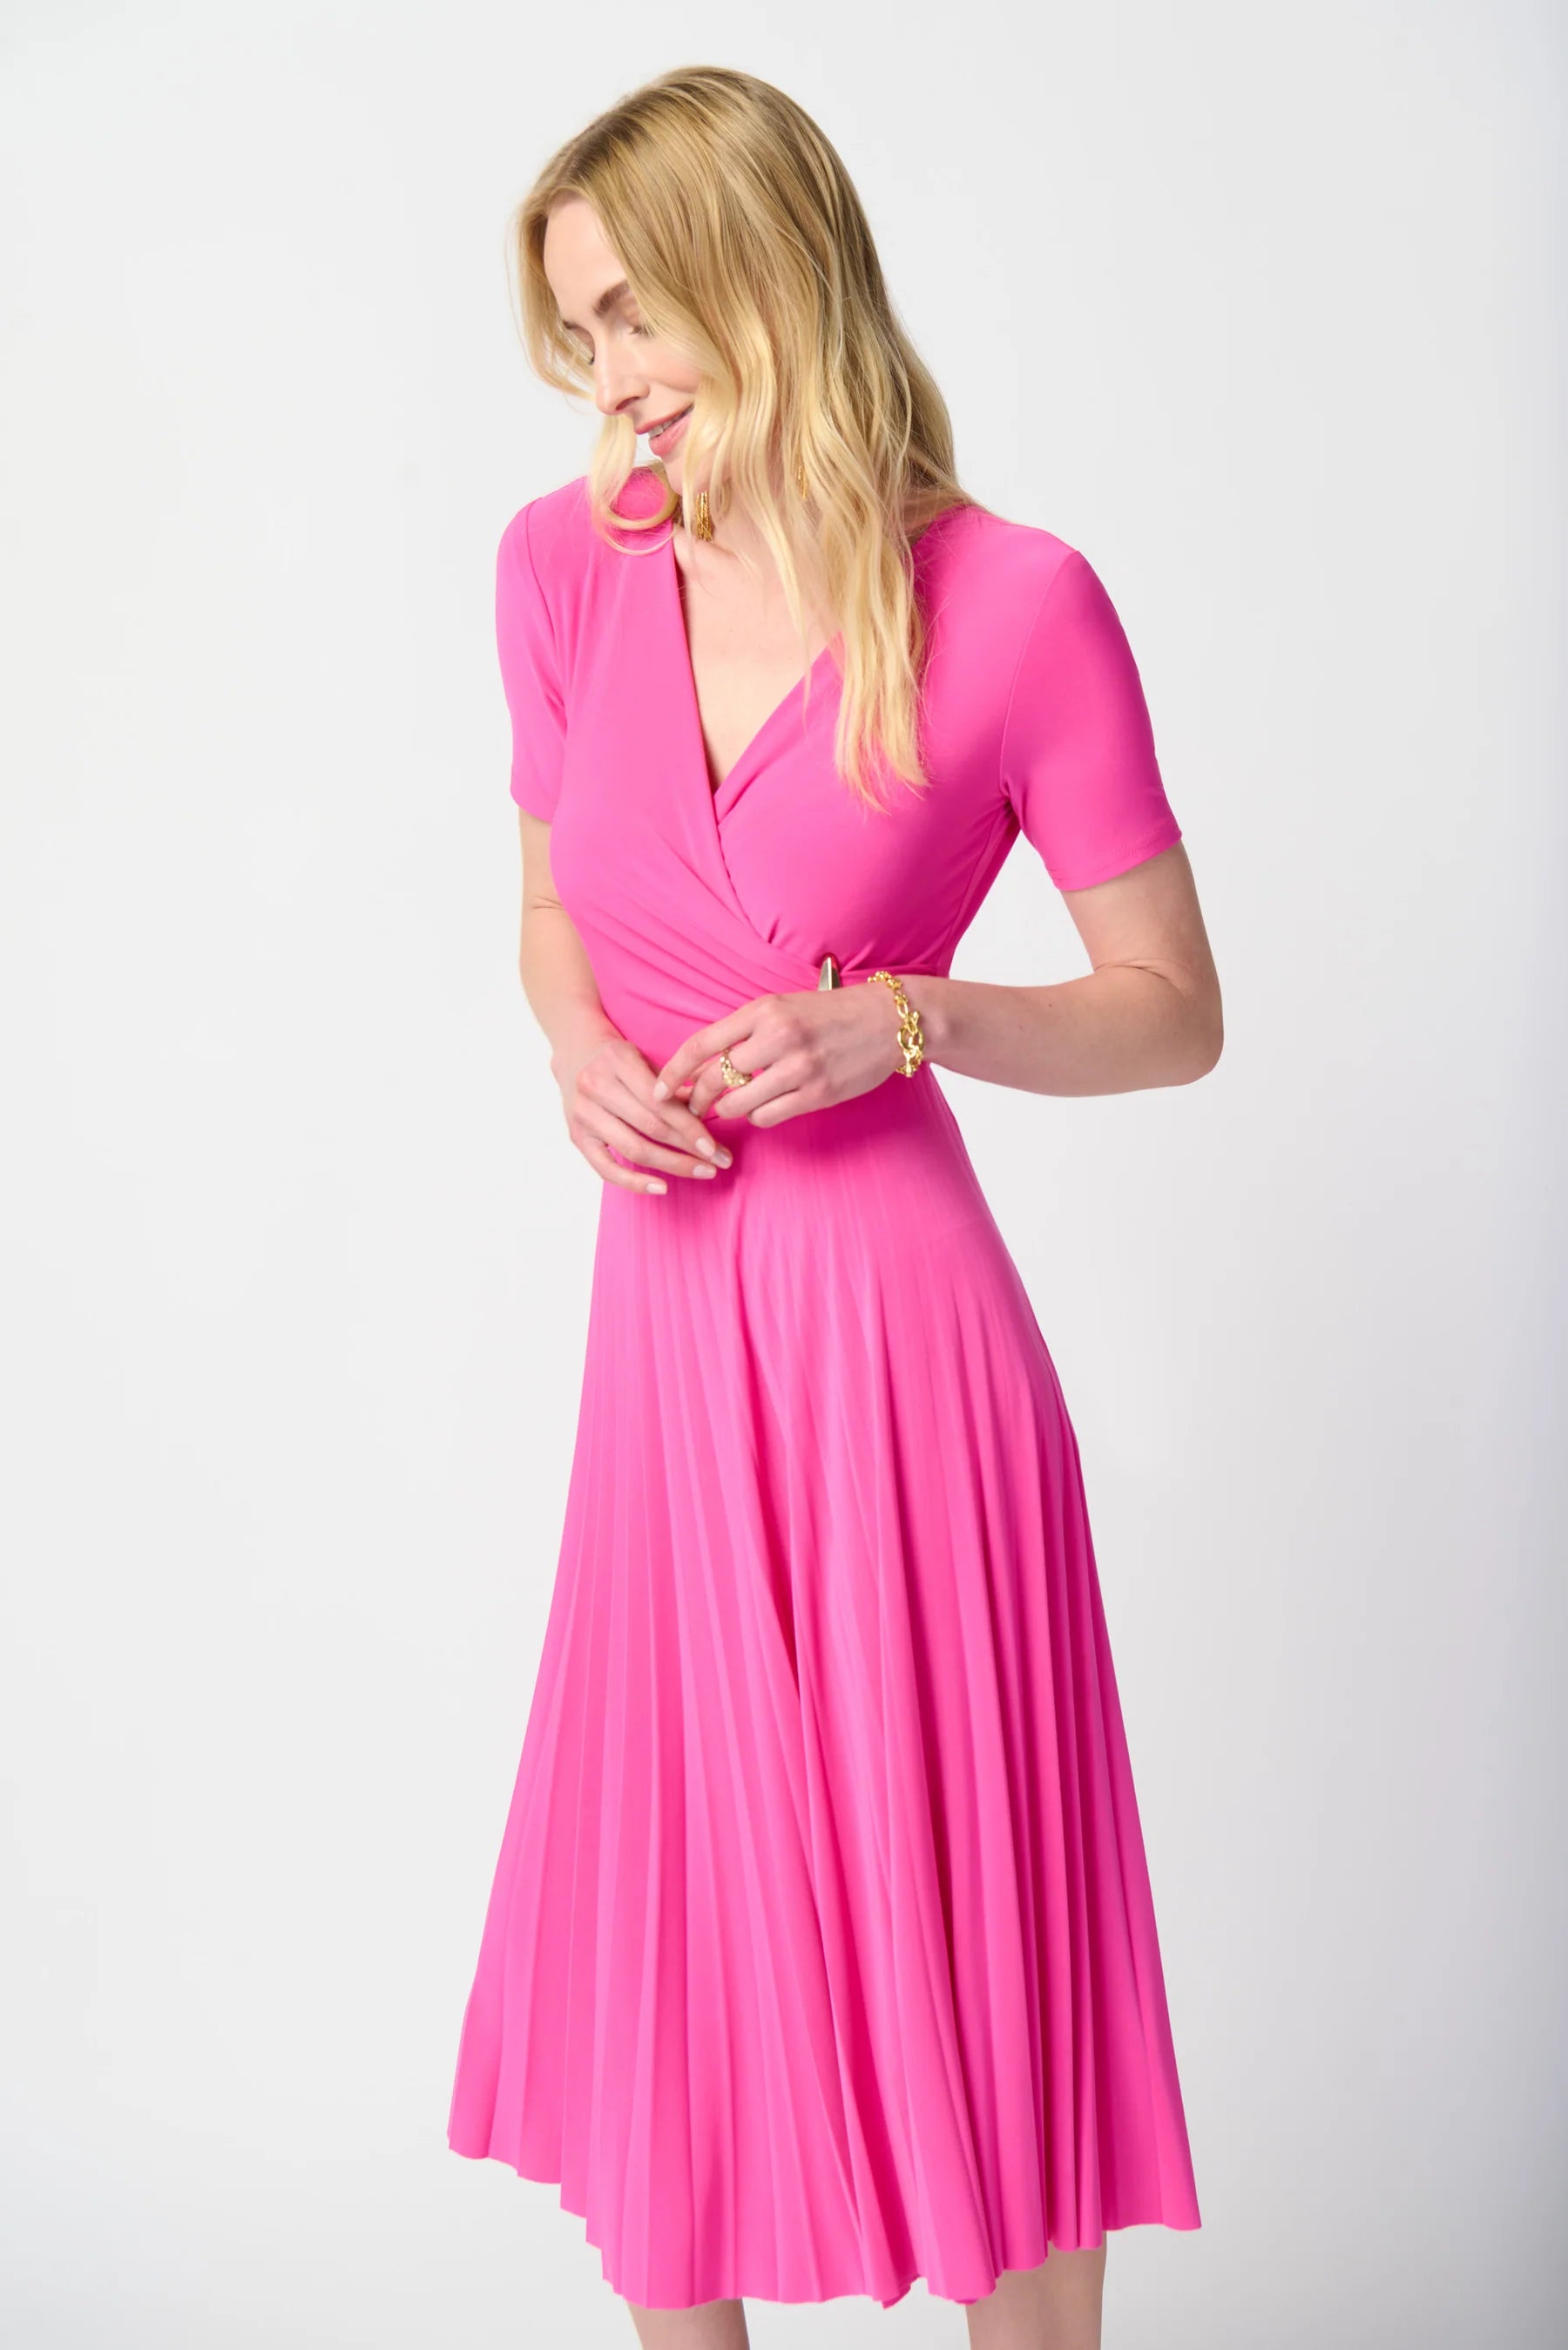 Joseph Ribkoff Ultra Pink Pleated Wrap Dress